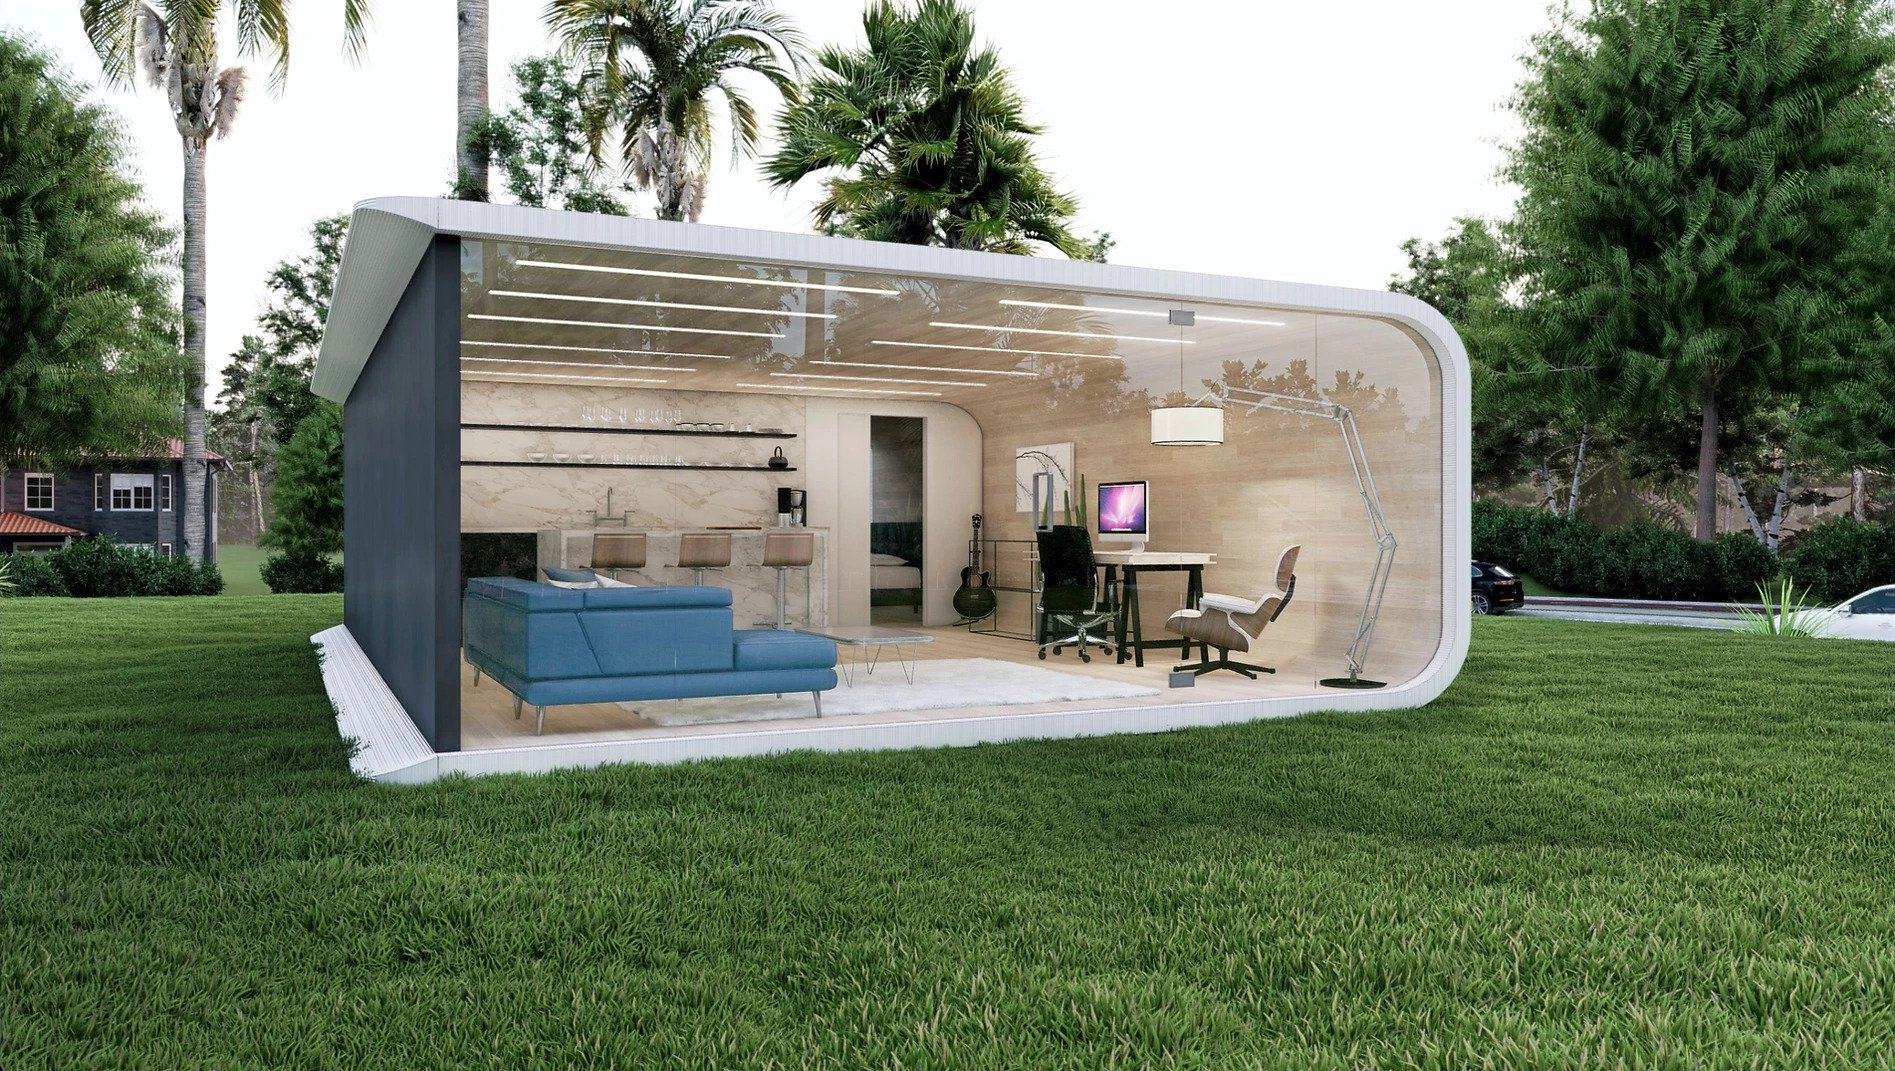 A render of one of Azure's 3D printed ADUs. Image via Azure Printed Homes.